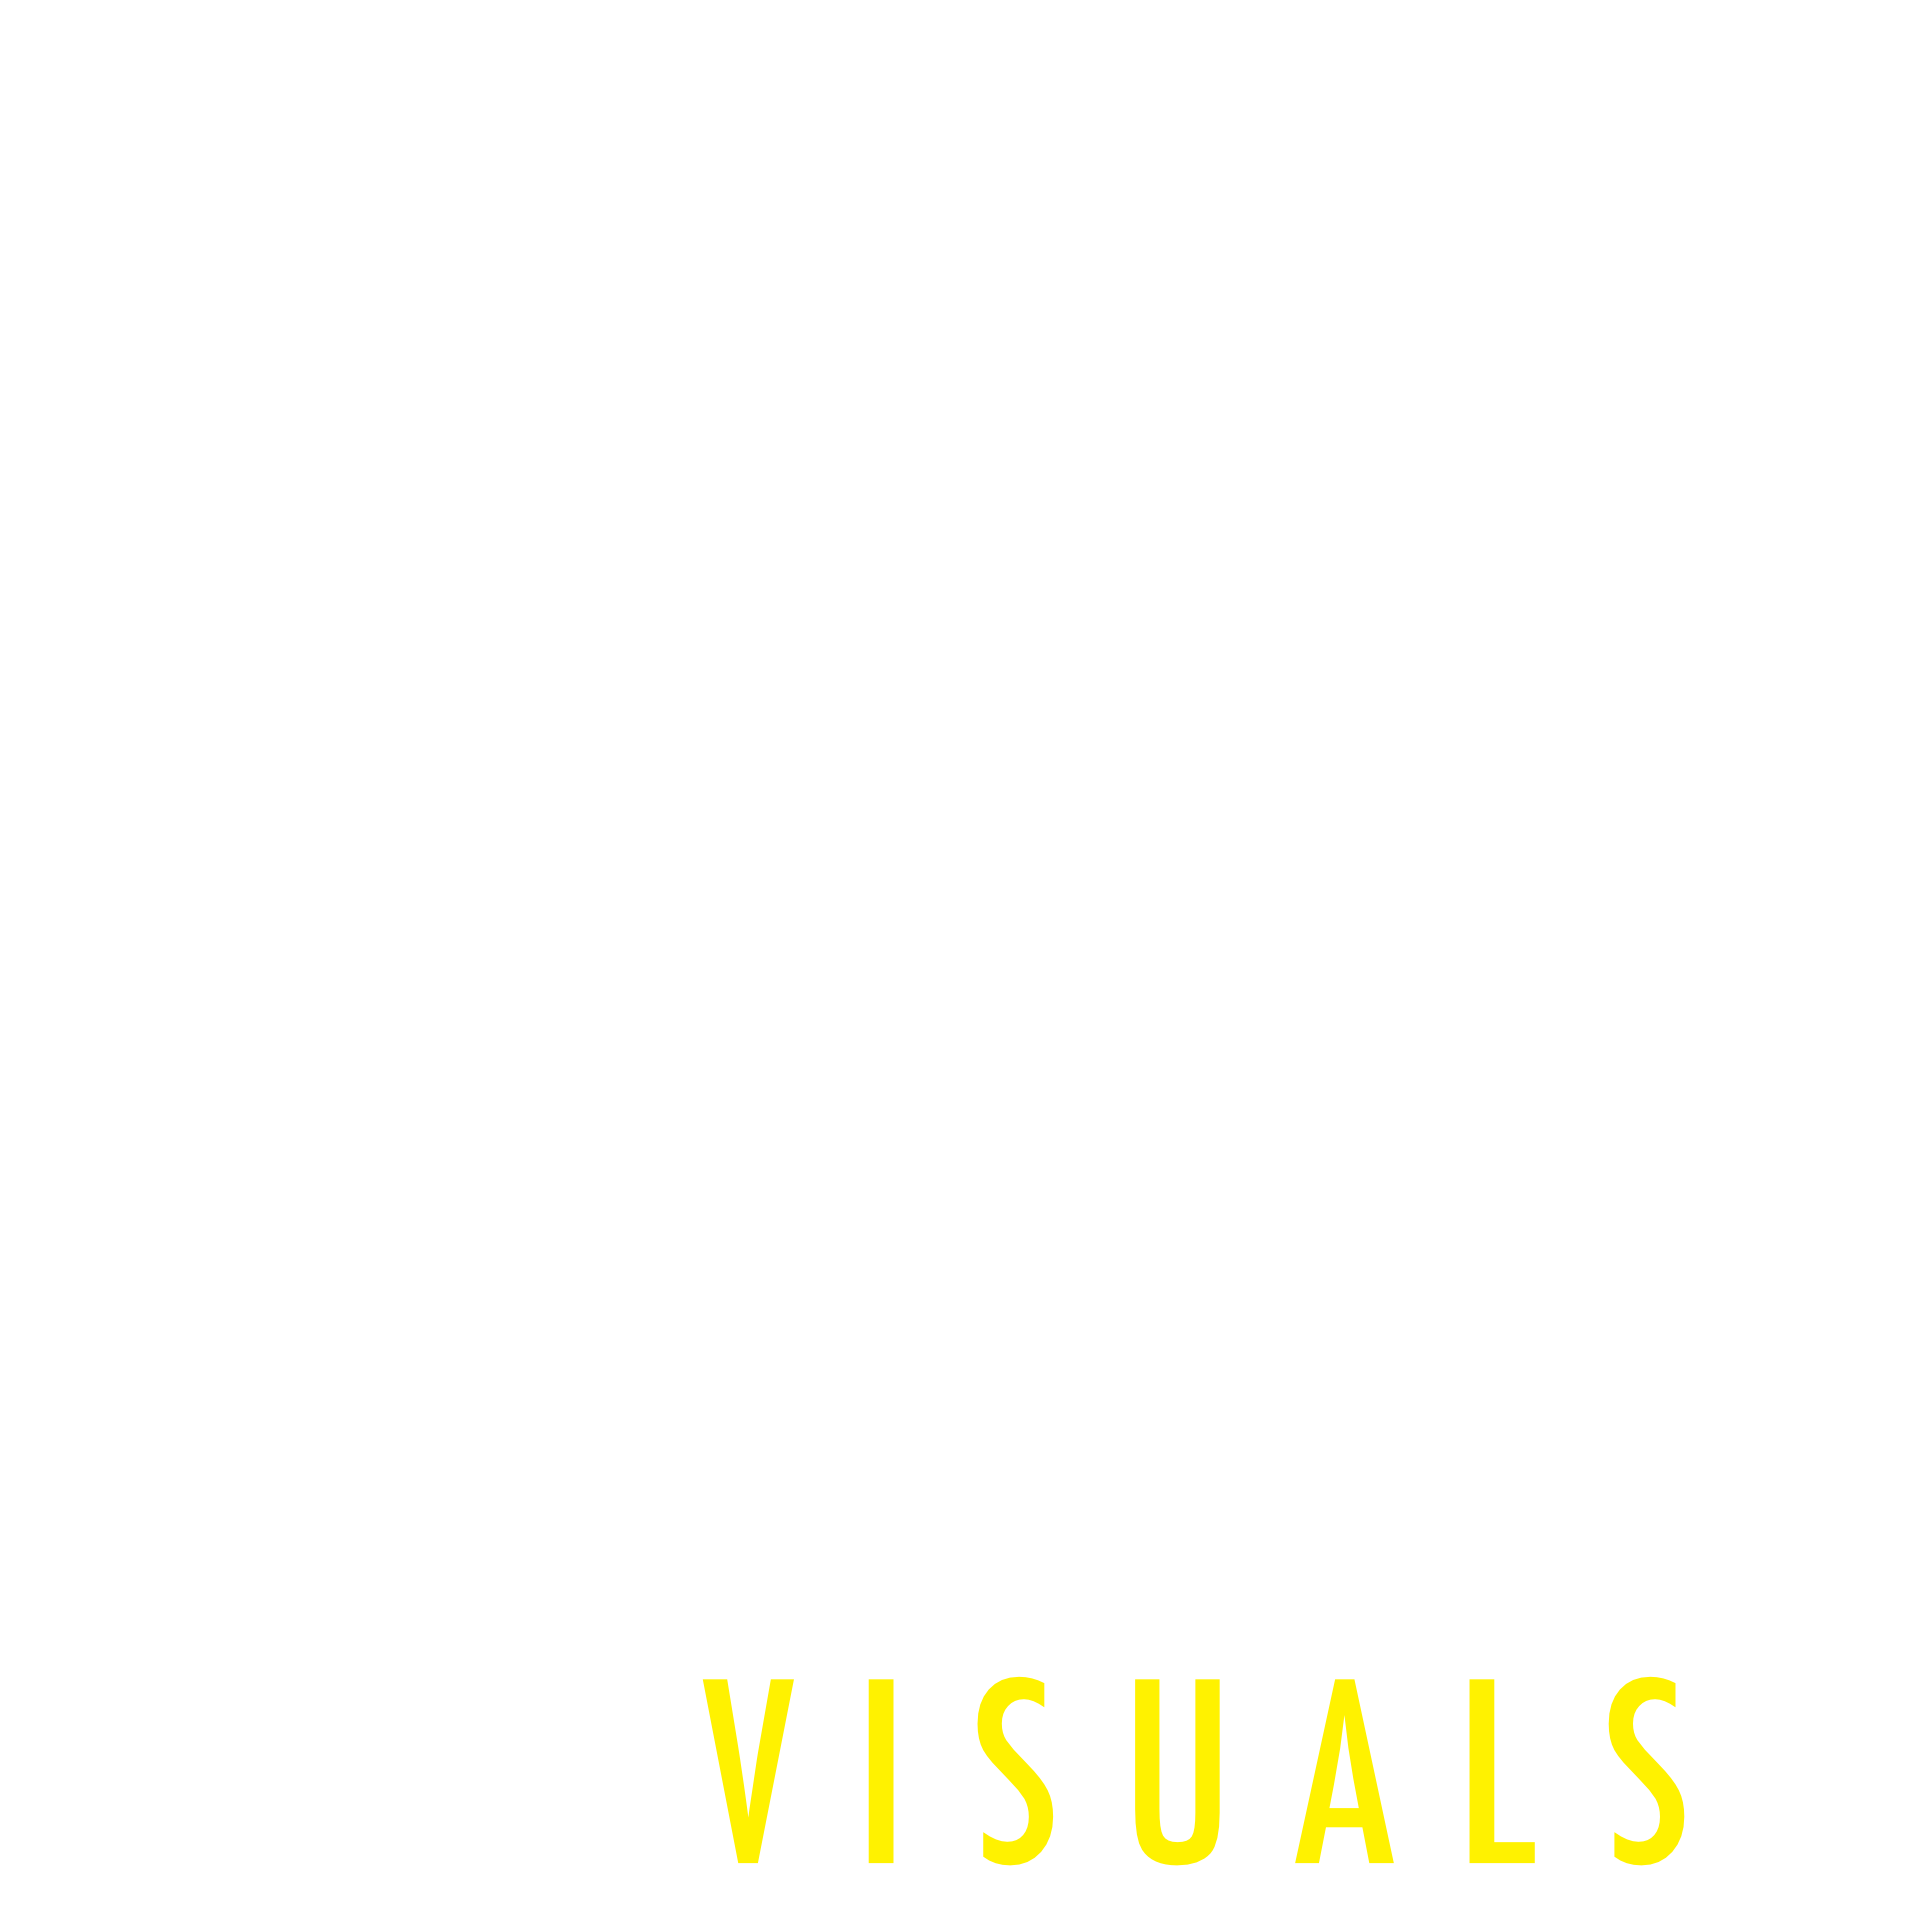 Bill Streeter